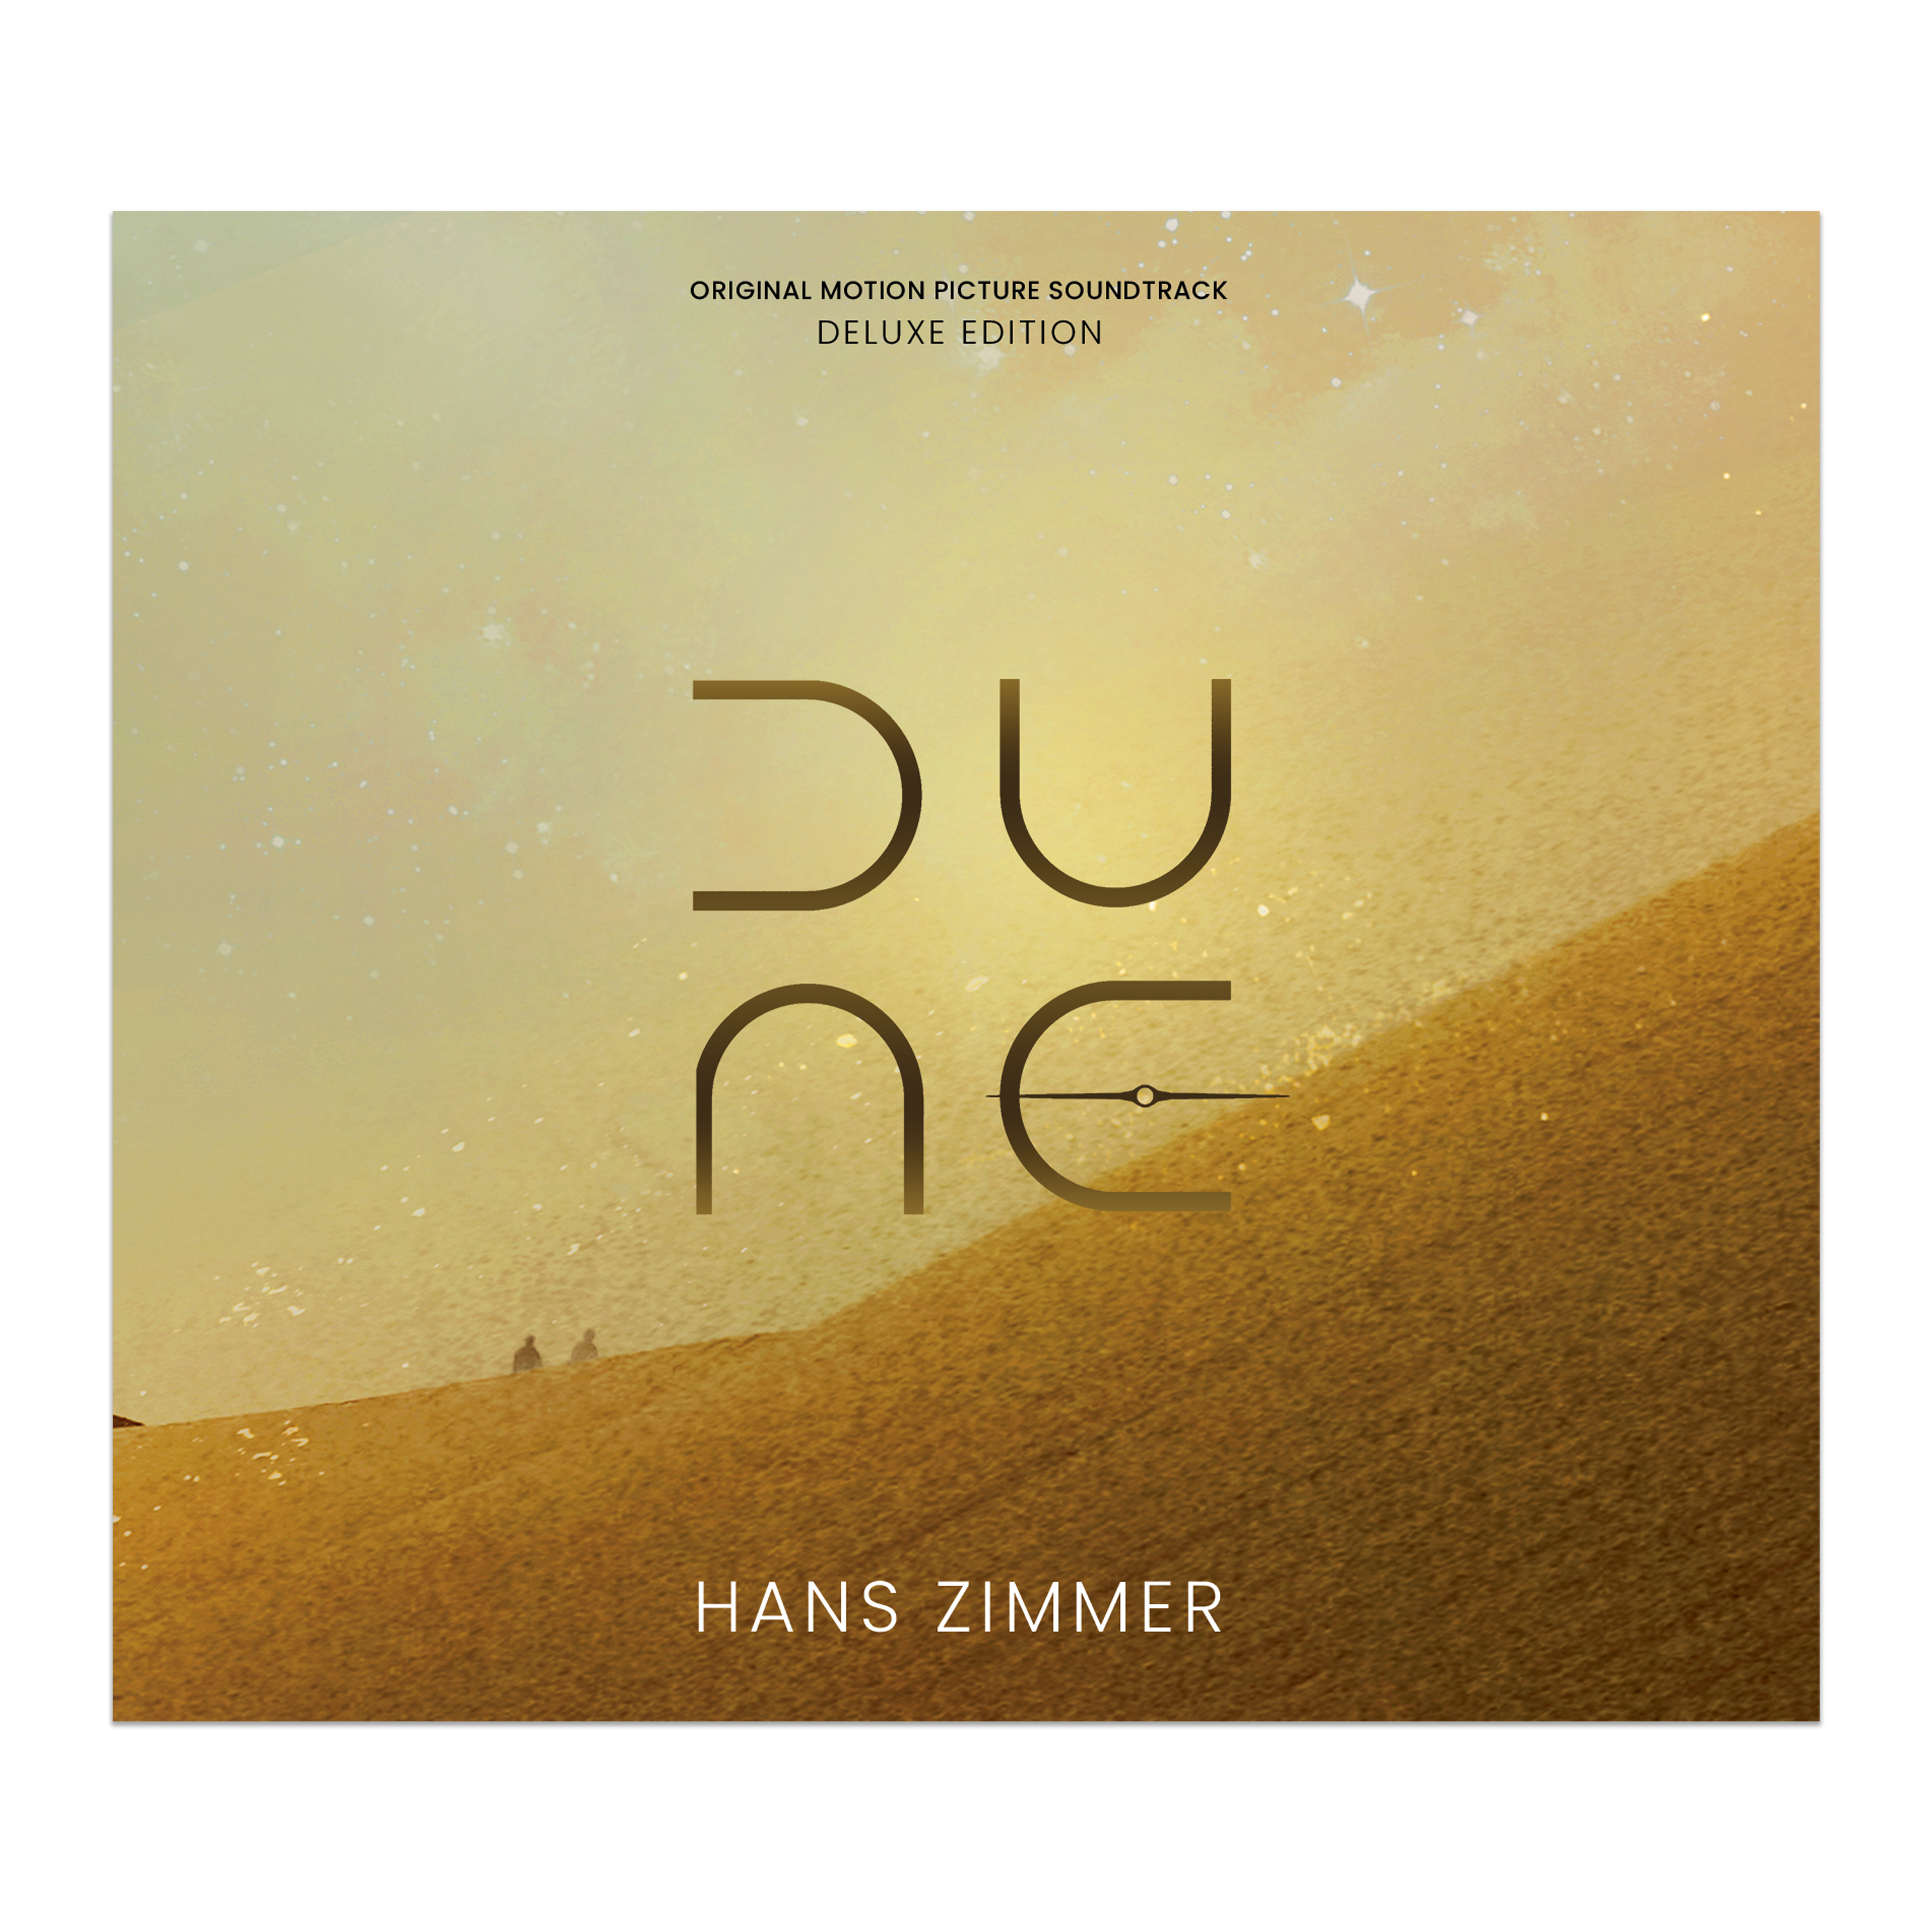 Хан зиммер дюна 2. Dune Zimmer обложка альбома. Дюна Делюкс издание. Ханс Циммер Дюна 3. Dune (Original Motion picture Soundtrack).